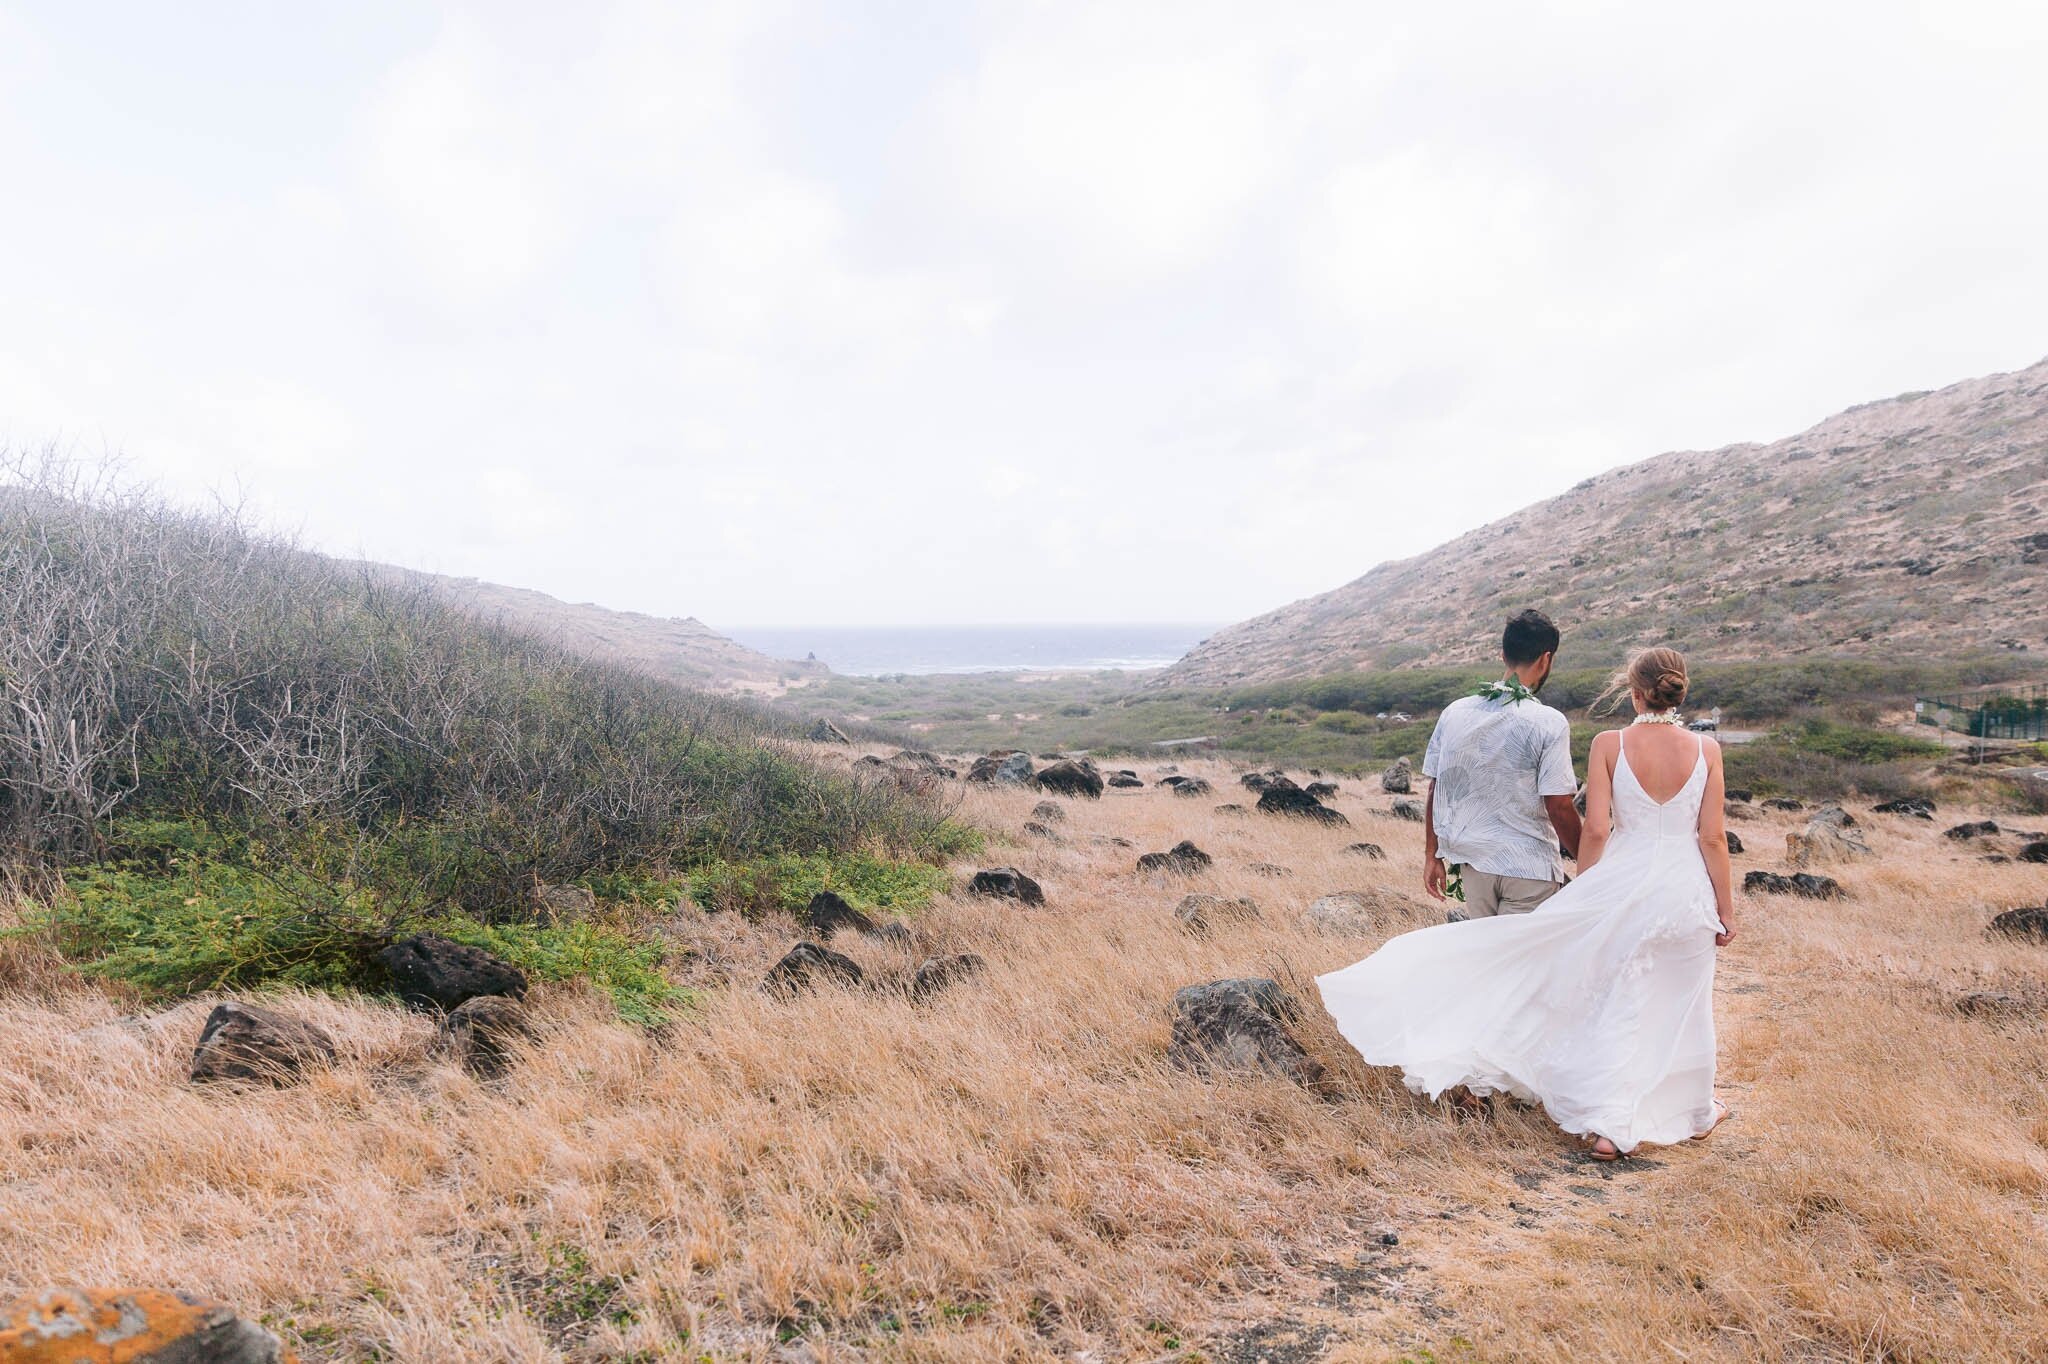 Elopement at Makapu’u Lookout - Oahu Engagement Photography